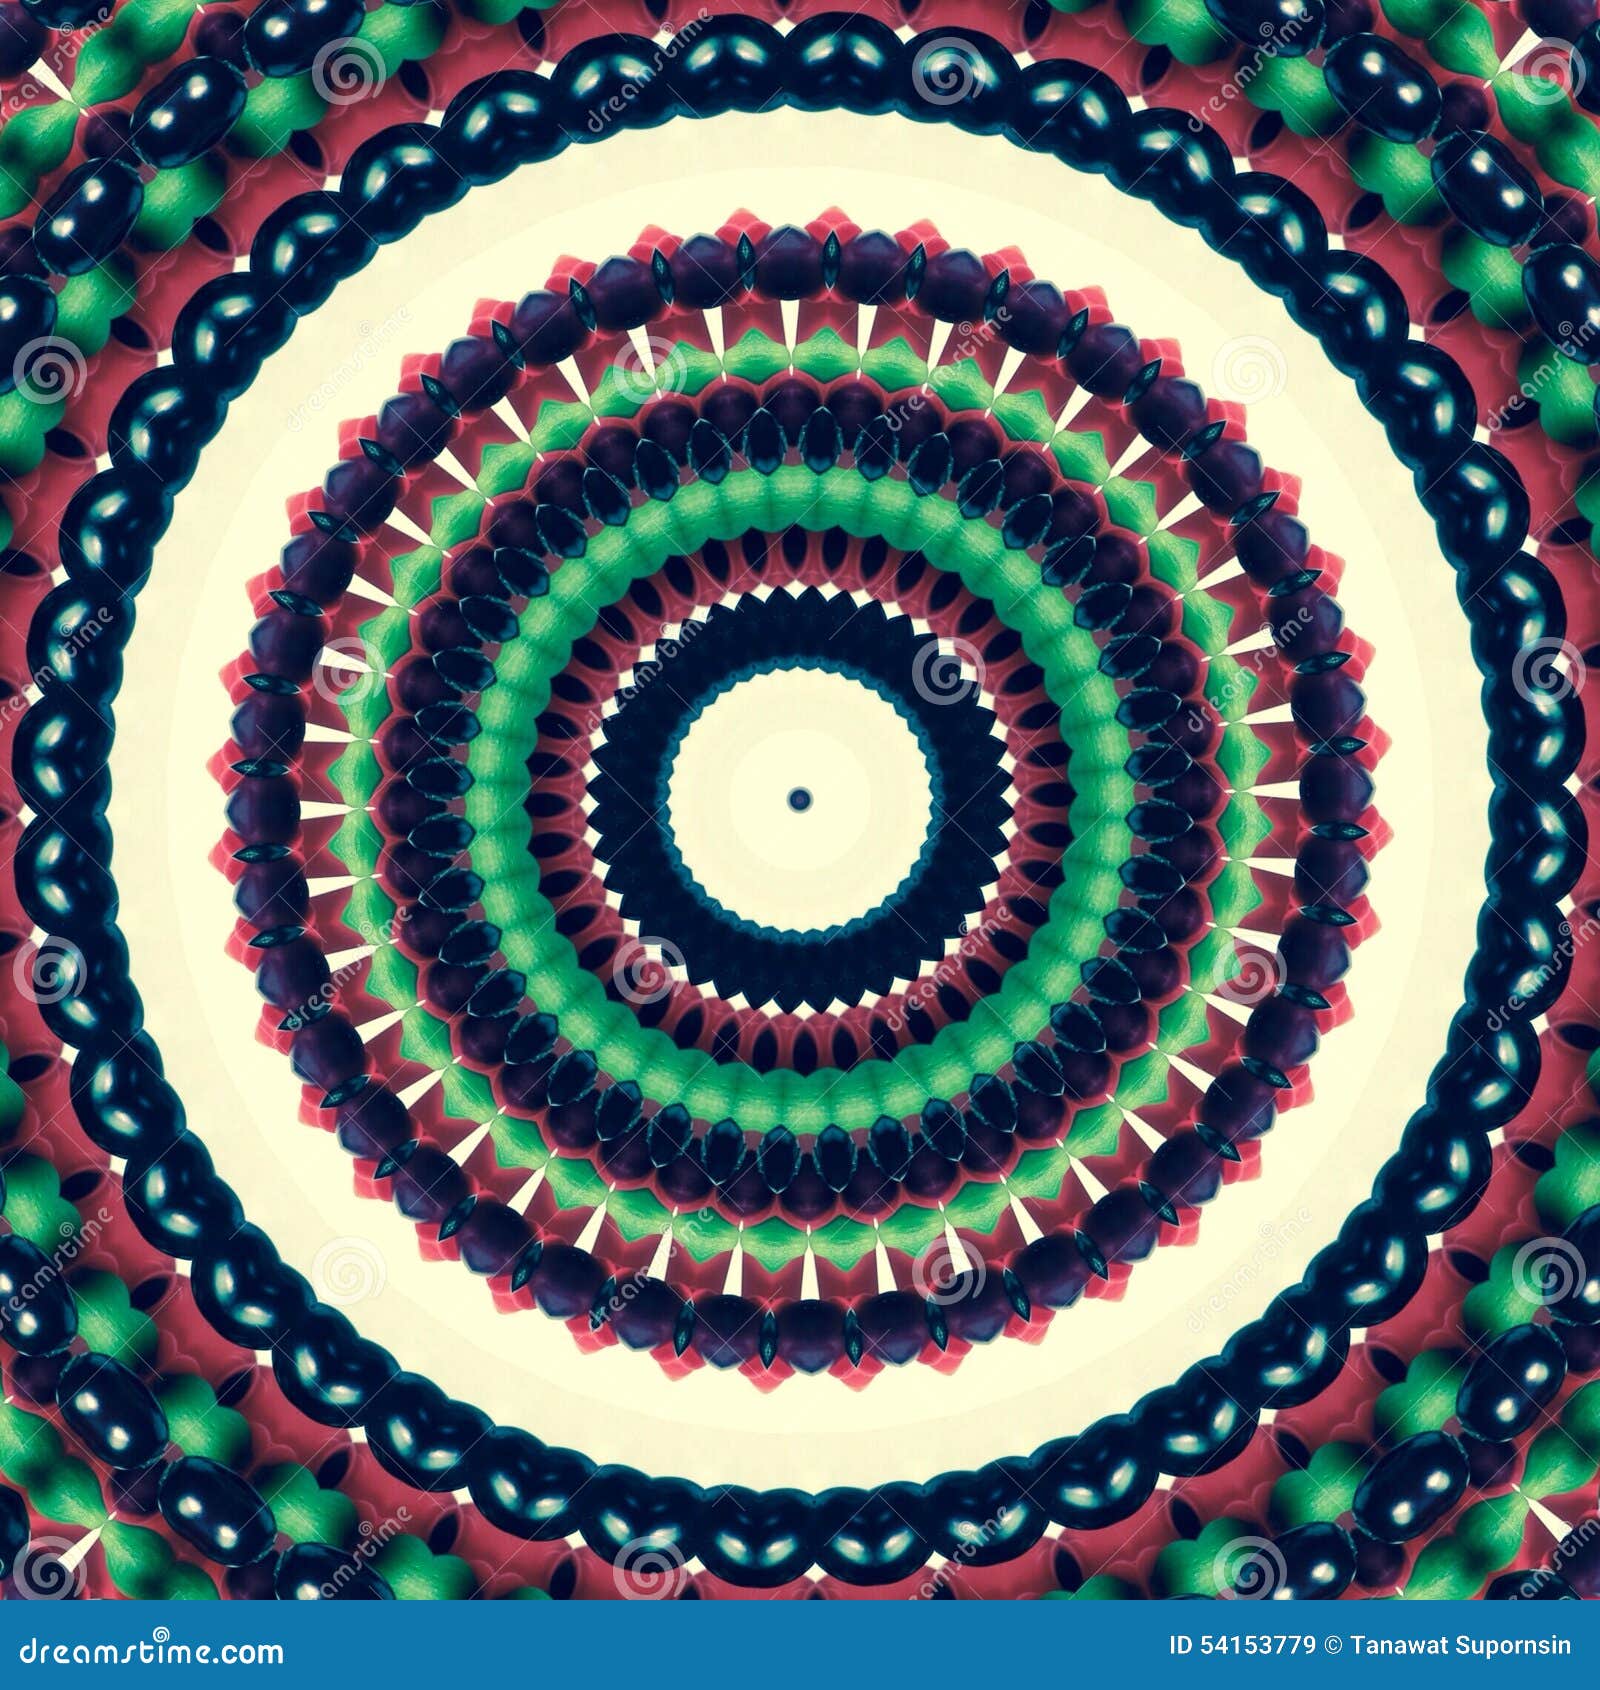 wallpaper for desktop, laptop | vr03-abstract-red-green-art-pattern